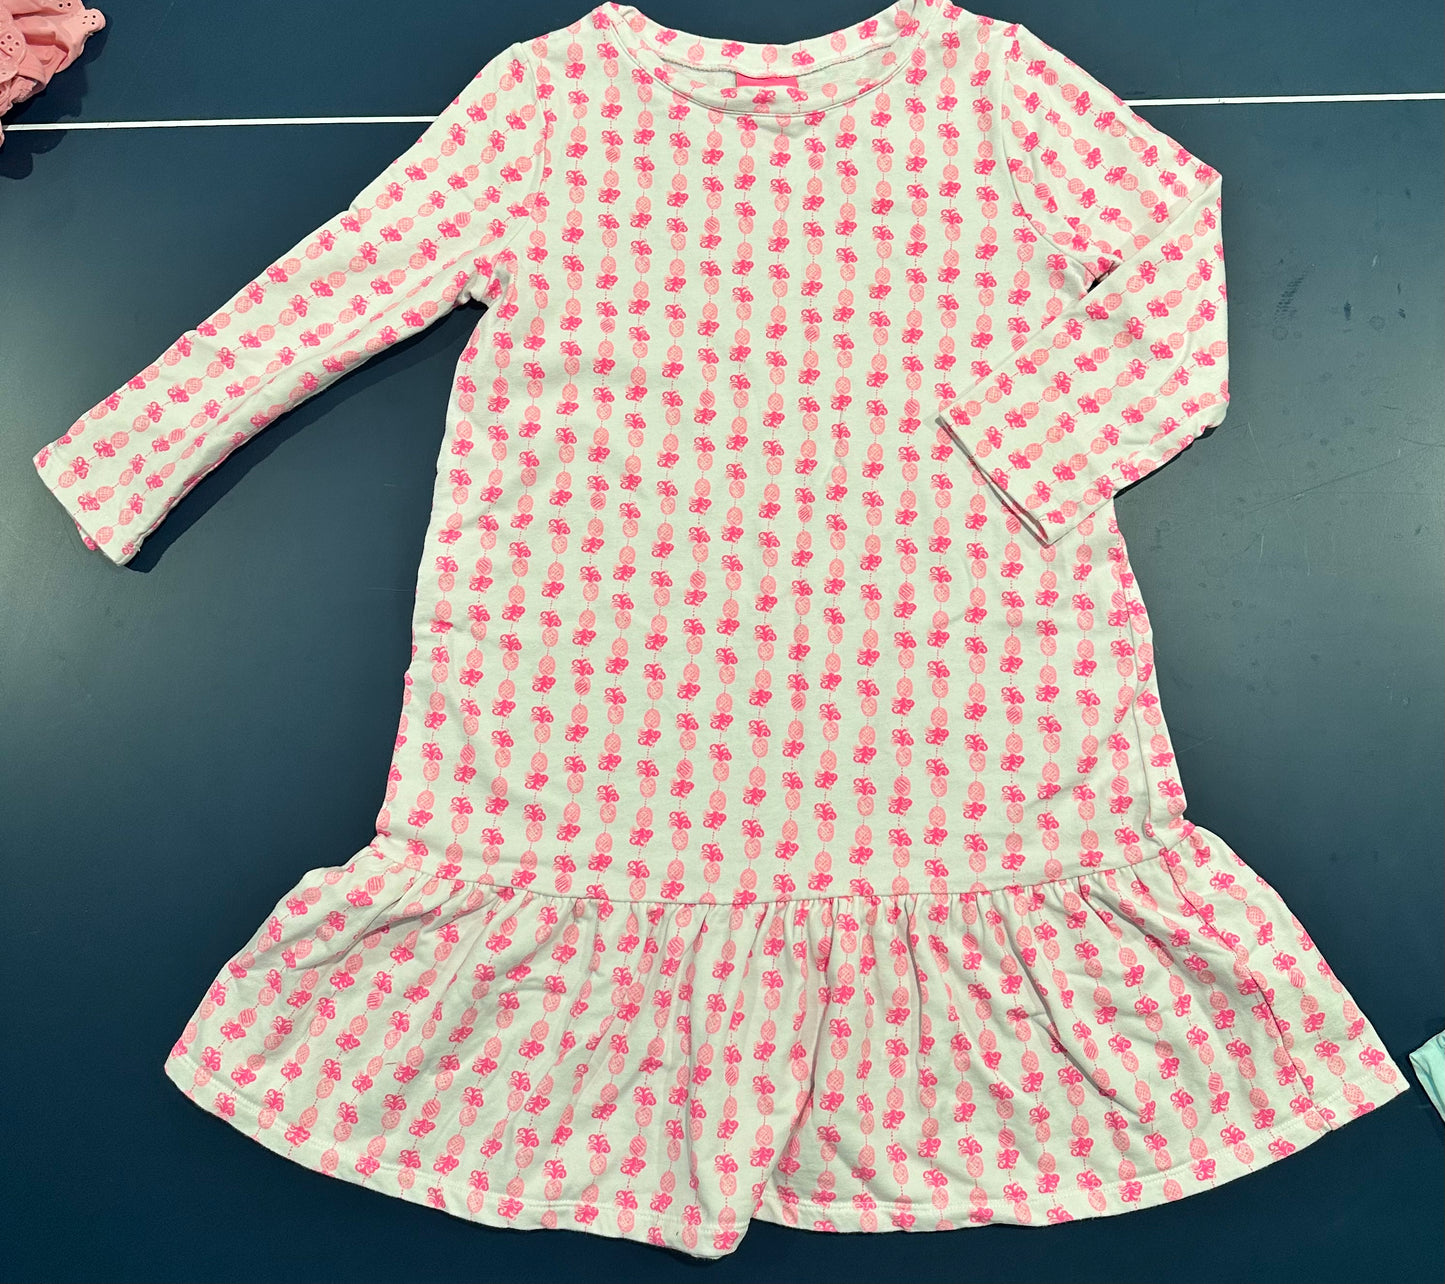 Lilly Pulitzer girls 3/4 length sleeve pineapple dress. Girls size XL 12-14